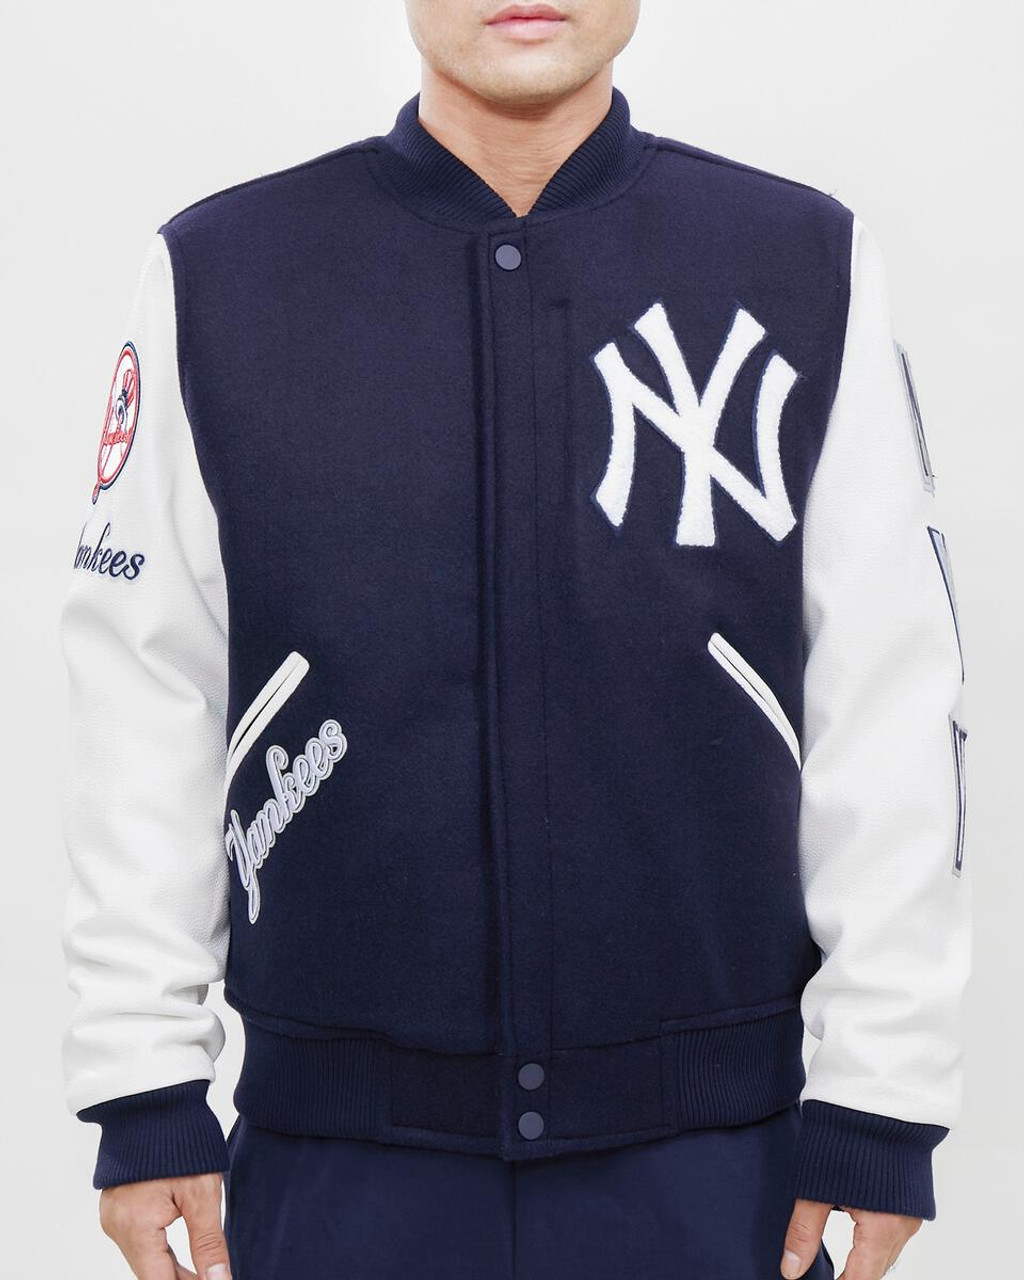 NY Yankees Varsity Jacket - Embroidered Logos